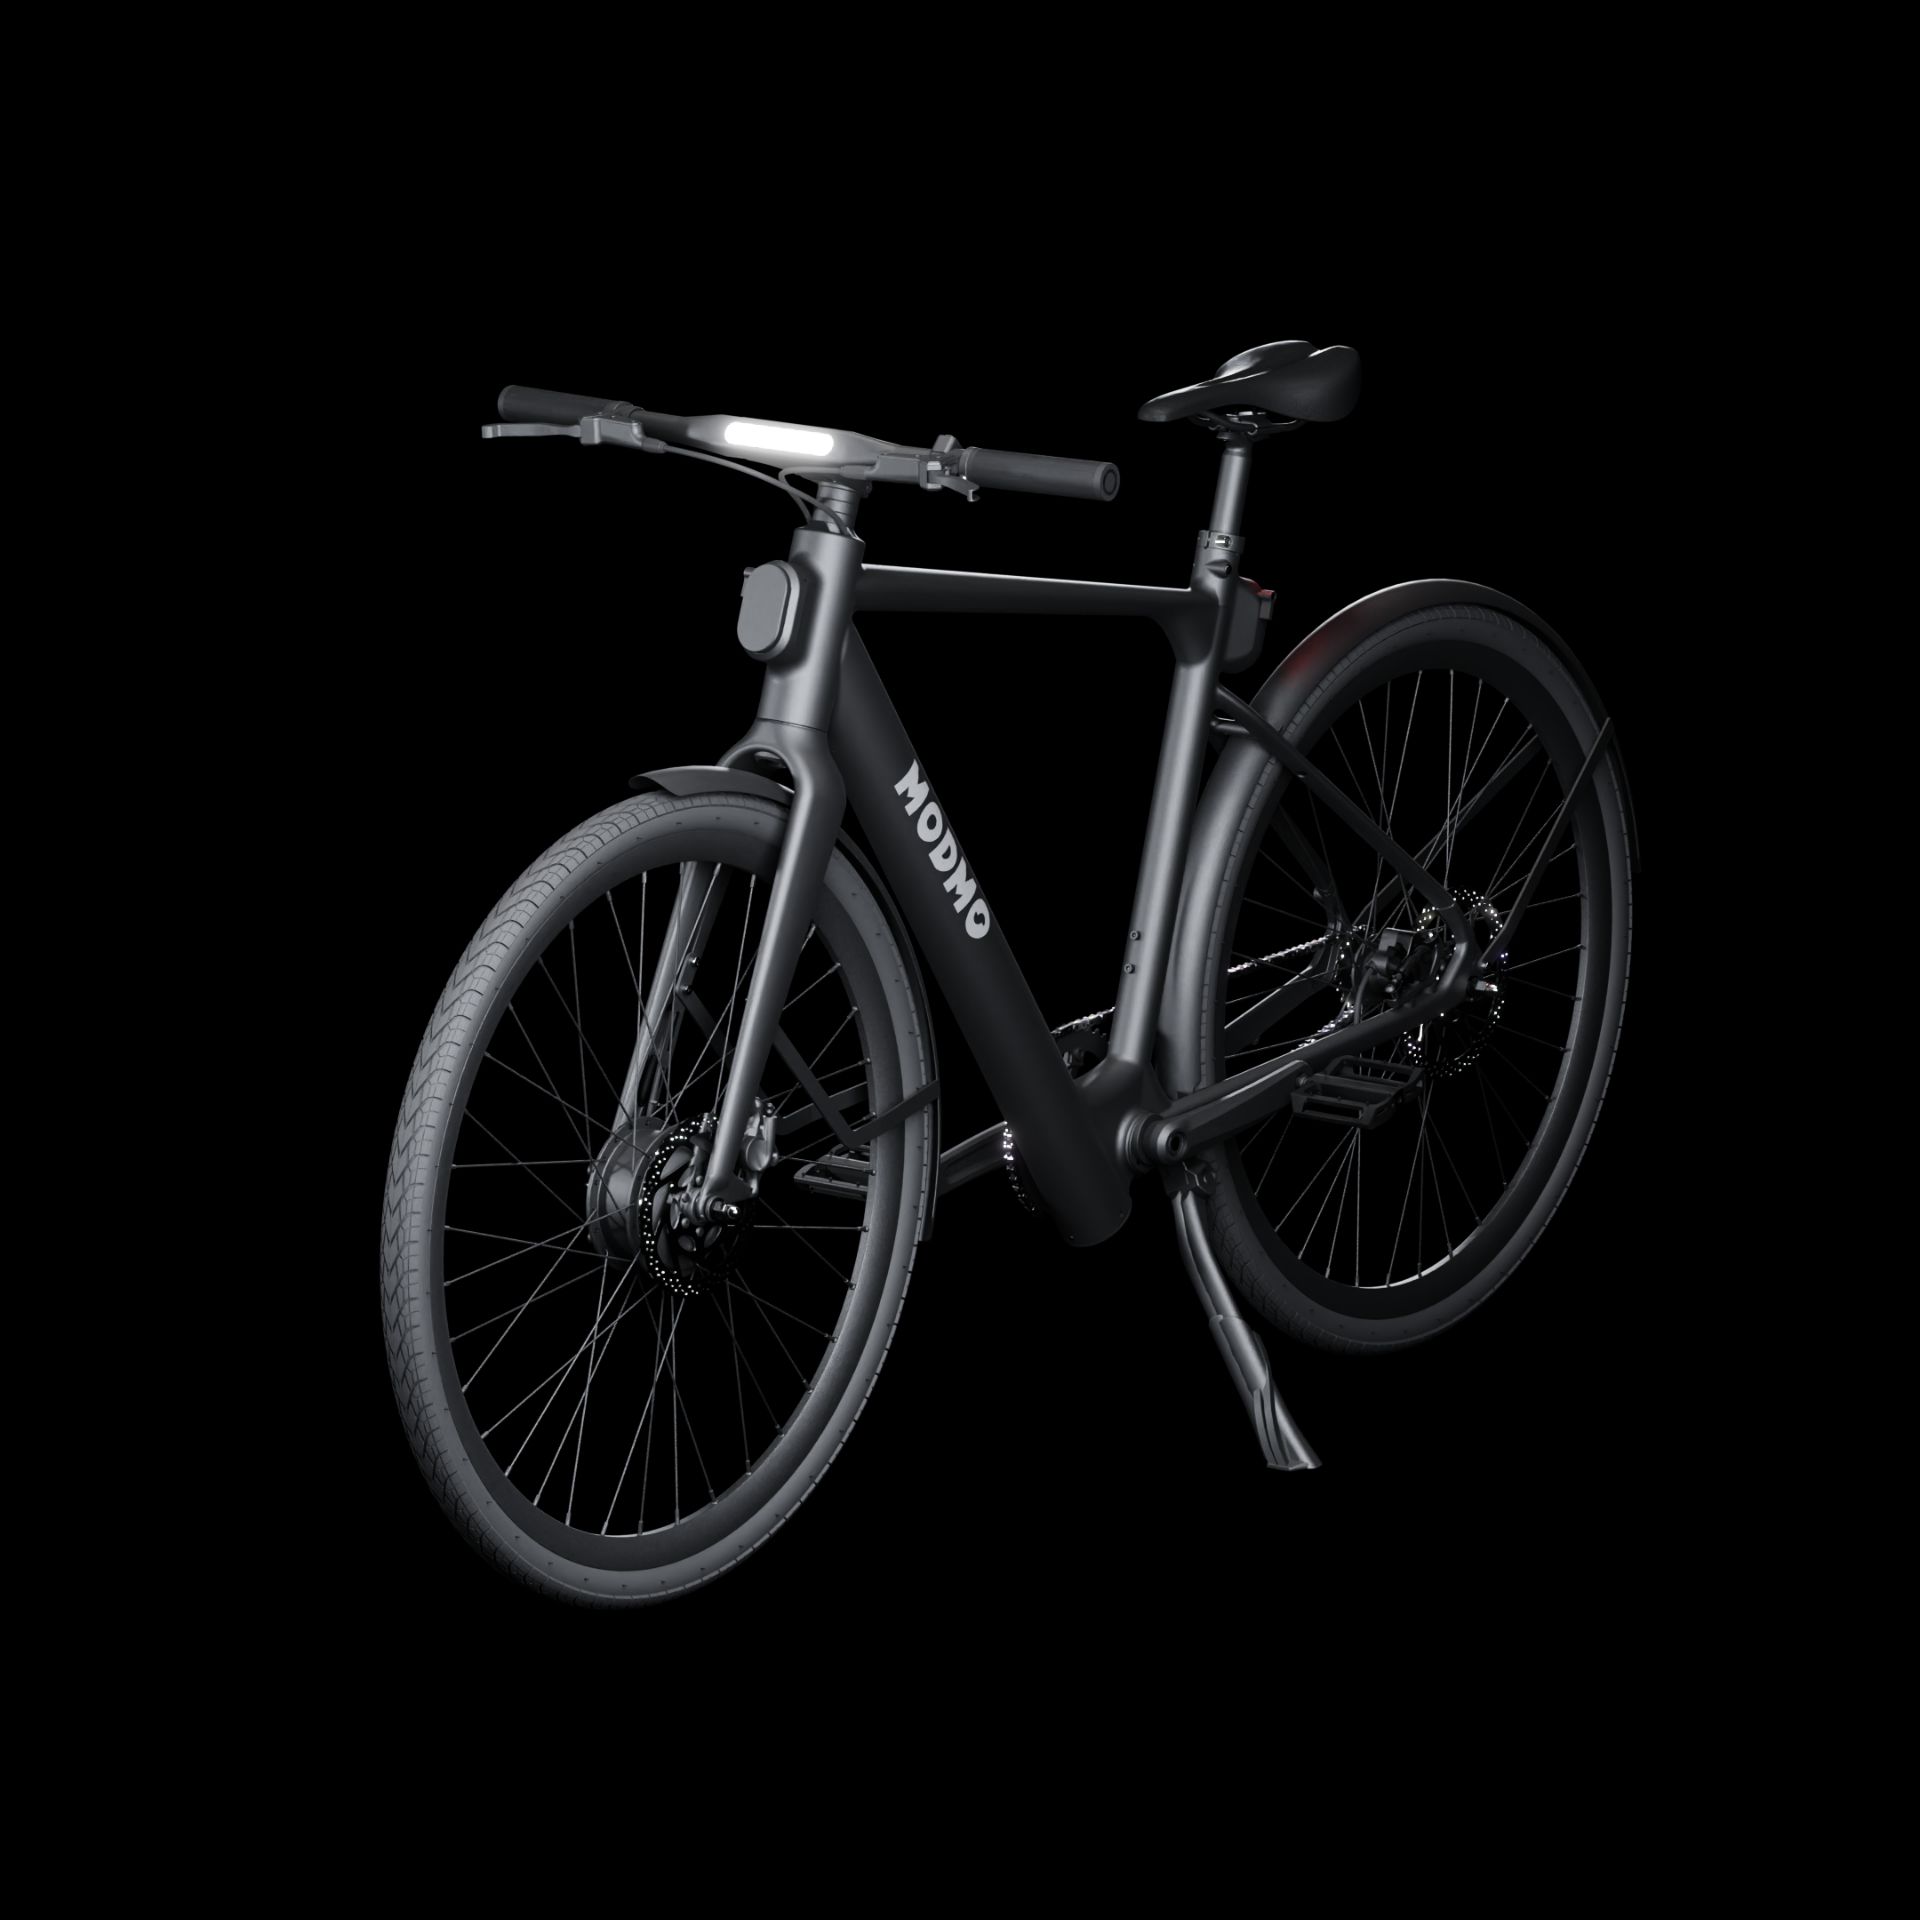 Modmo Saigon+ Electric Bicycle - RRP £2800 - Size M (Rider: 155-175cm) - Image 9 of 16